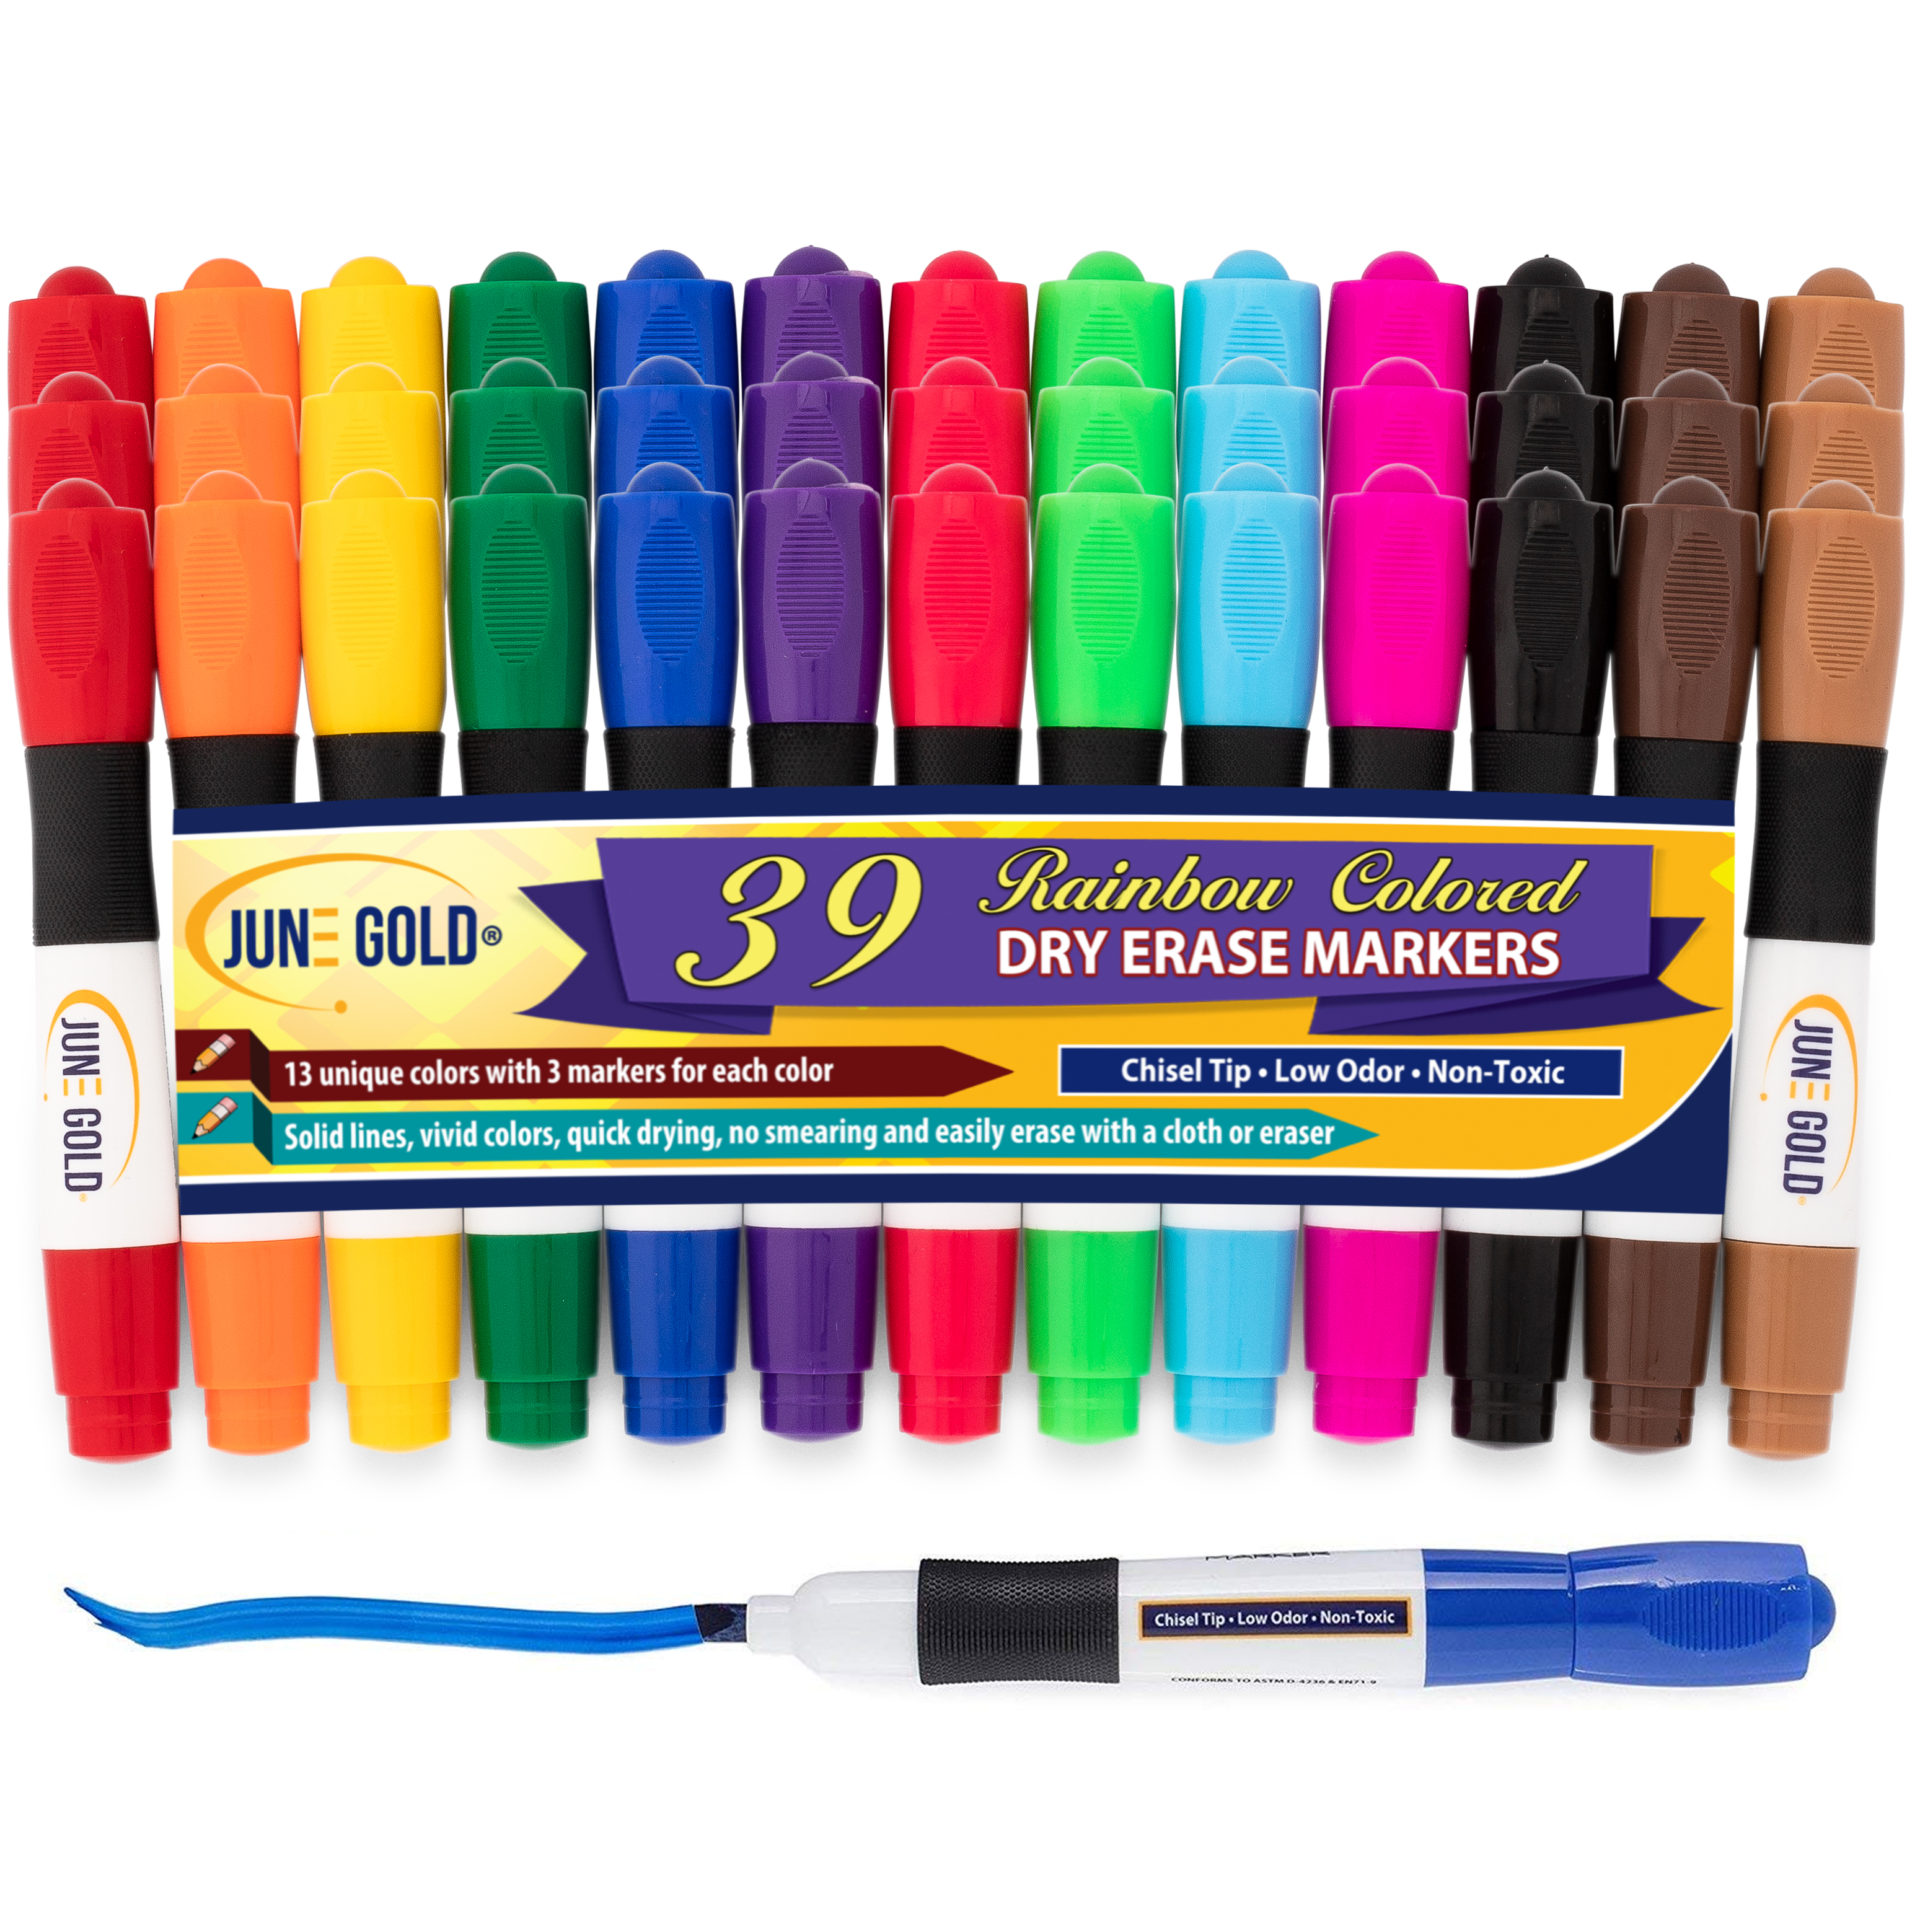 Rainbow Markers. Dry Erase Marker. 13 Маркером. Маркер для белой доски (4 цвета) Deli eu00403. Unique colors